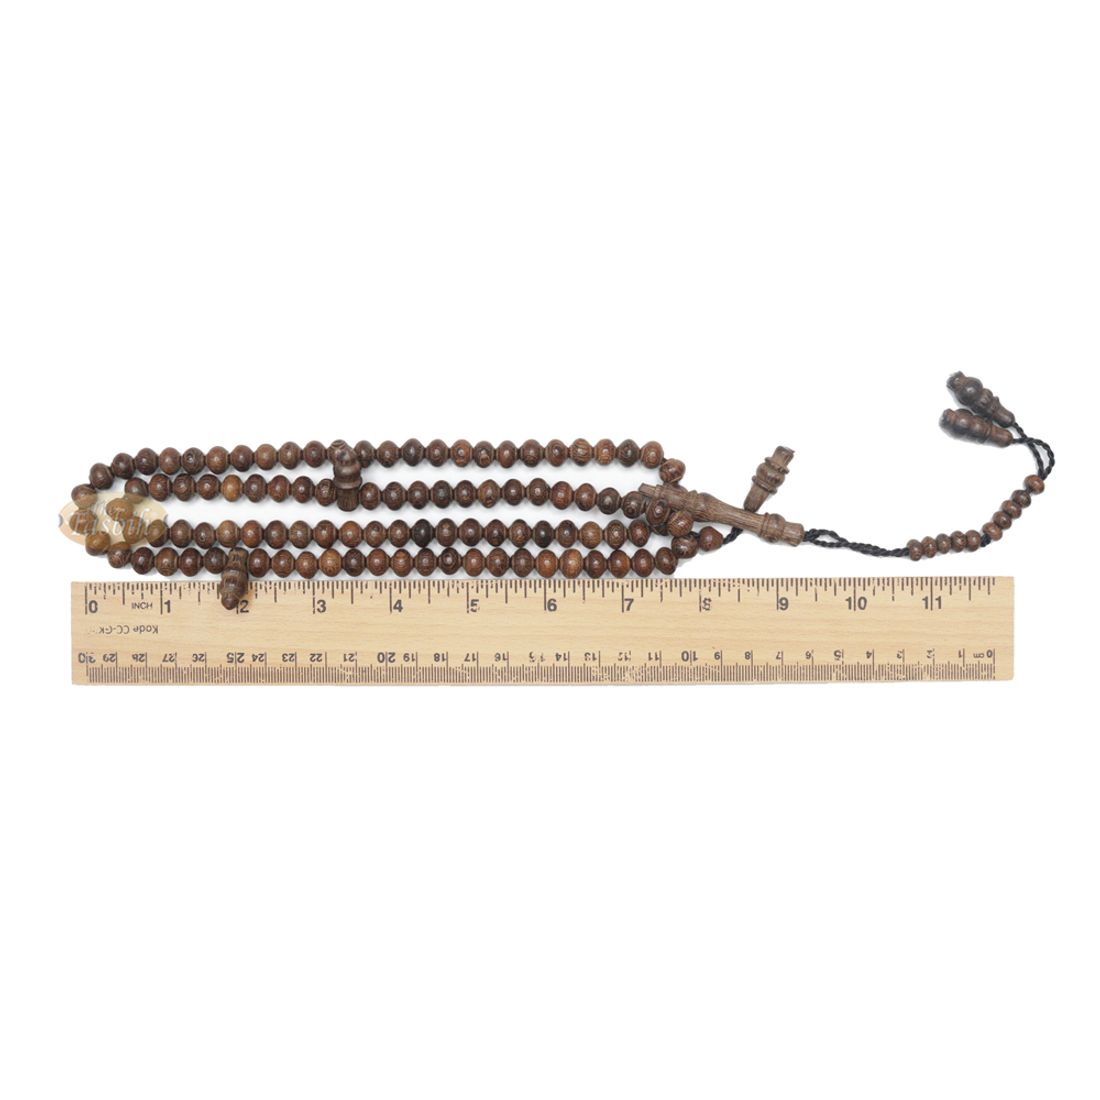 Wooden Islamic Prayer Beads – Natural Johar Wood Tasbih 99ct Contoured Beads in GIFT BOX